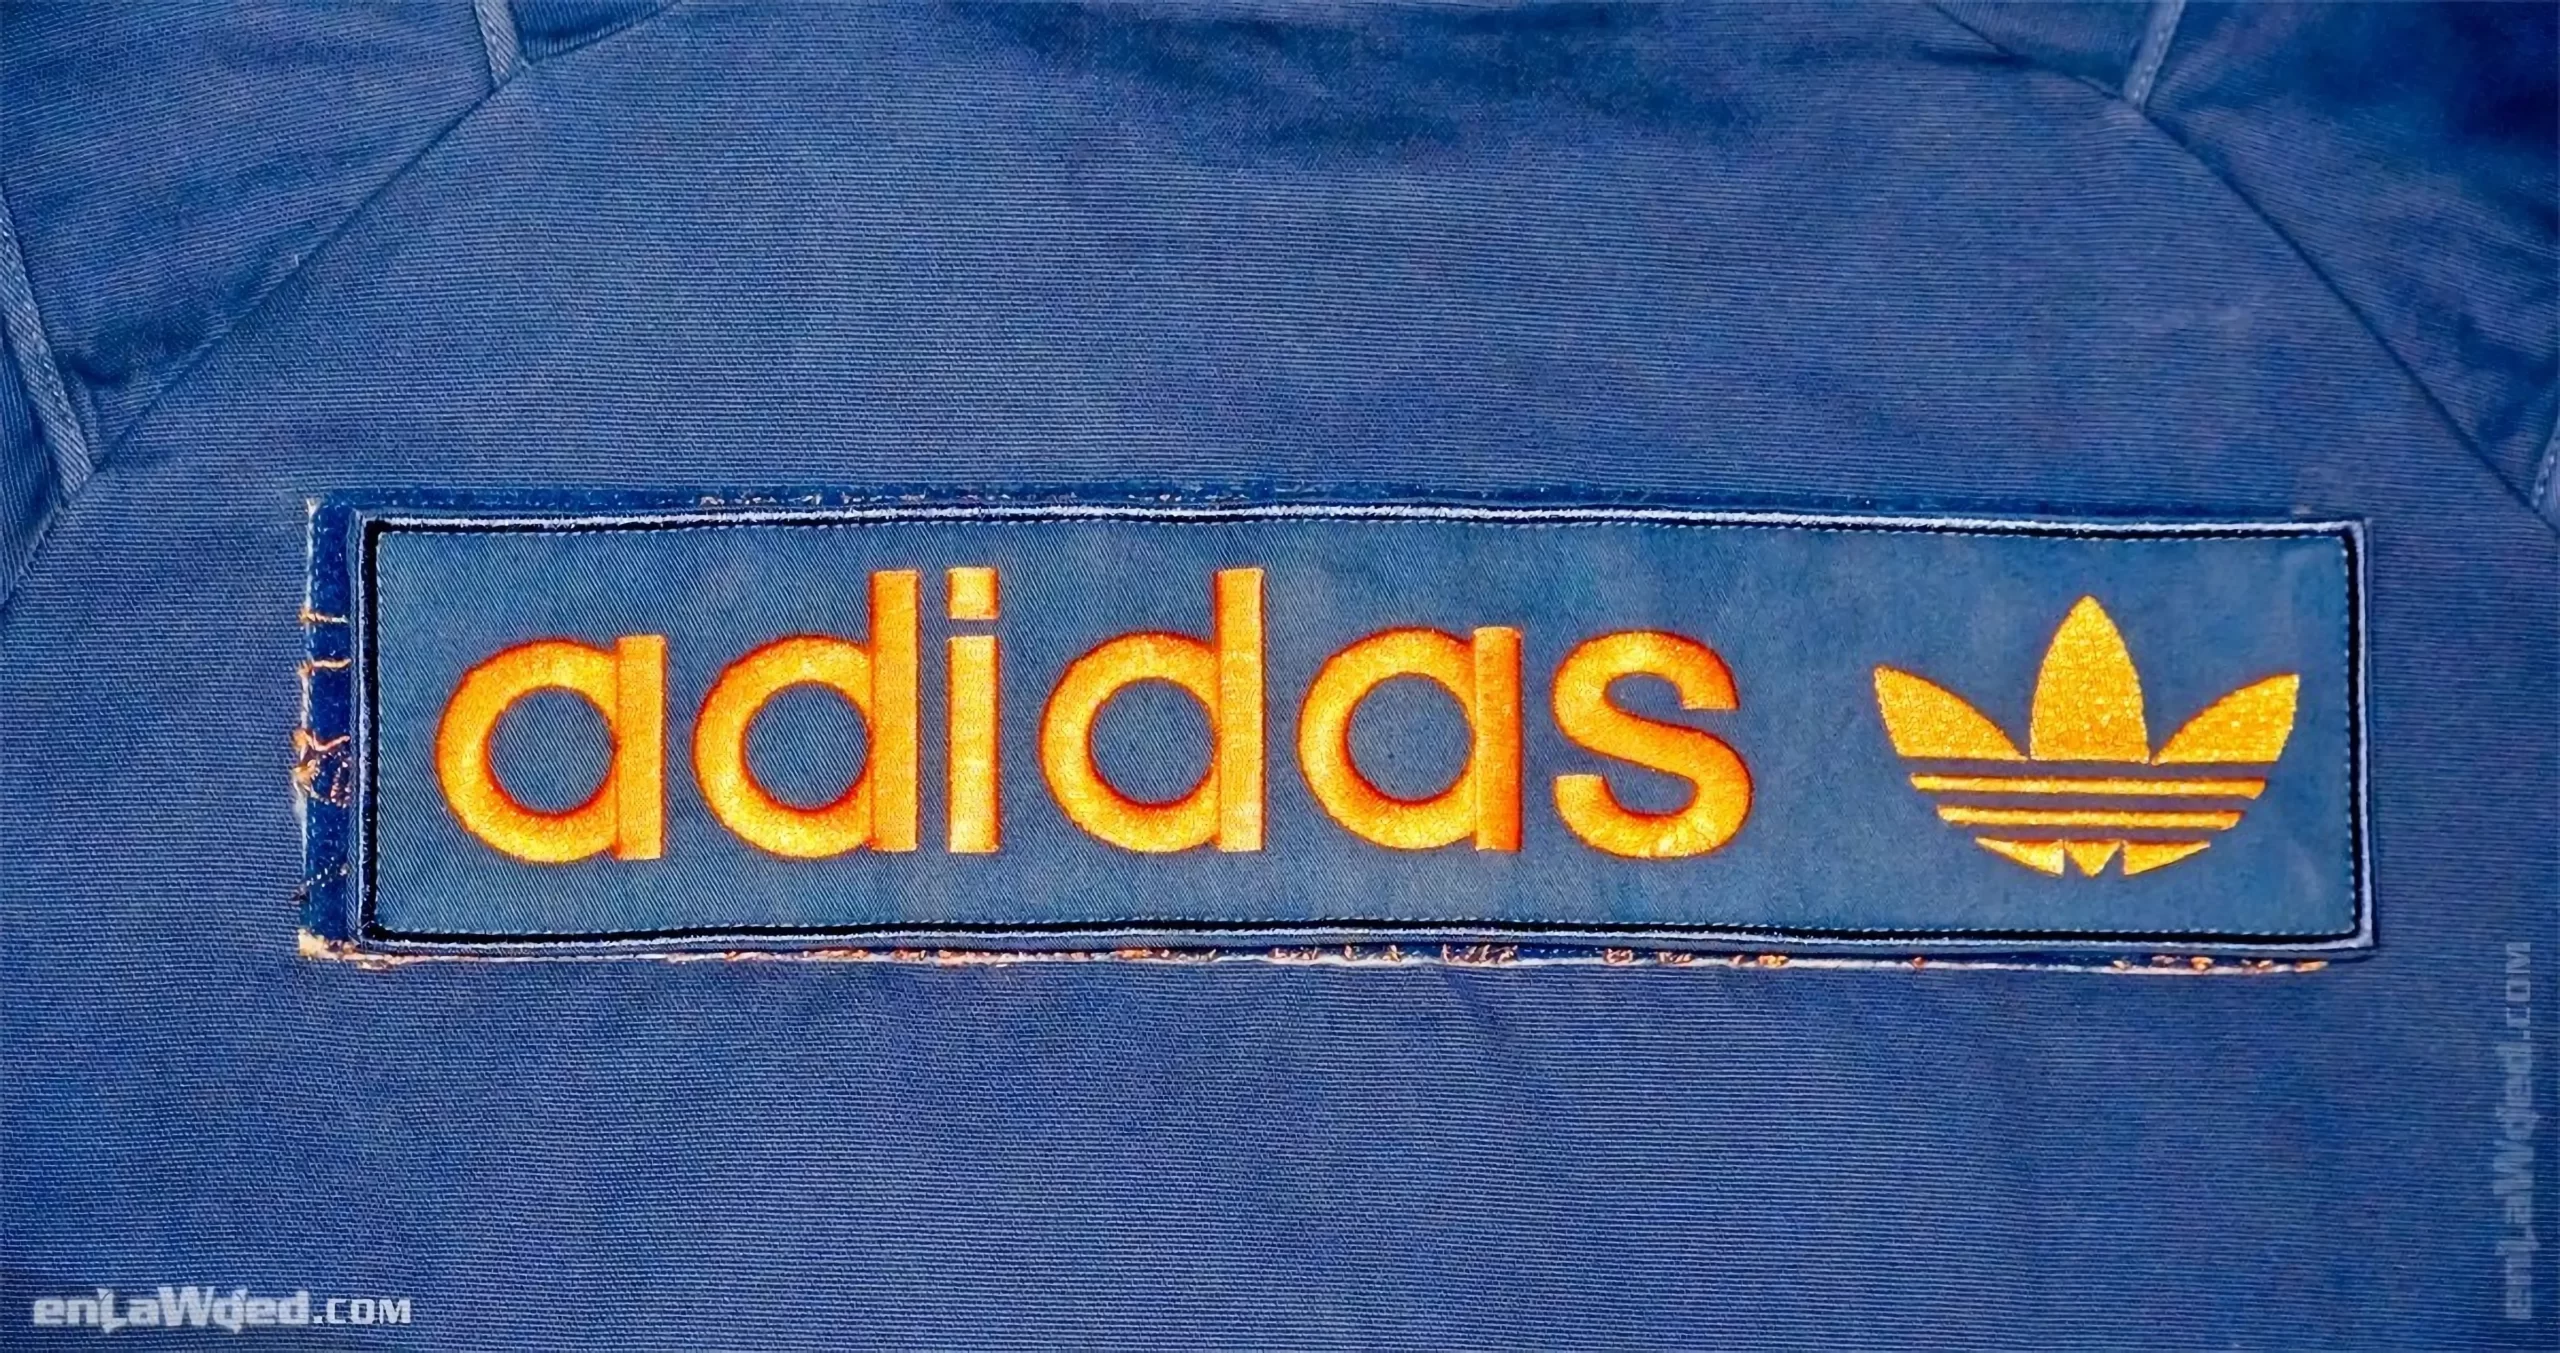 Men’s 2005 Adidas Originals Military Peace Jacket: Unstoppable (EnLawded.com file #lmchbomp7ikgaptoj2)